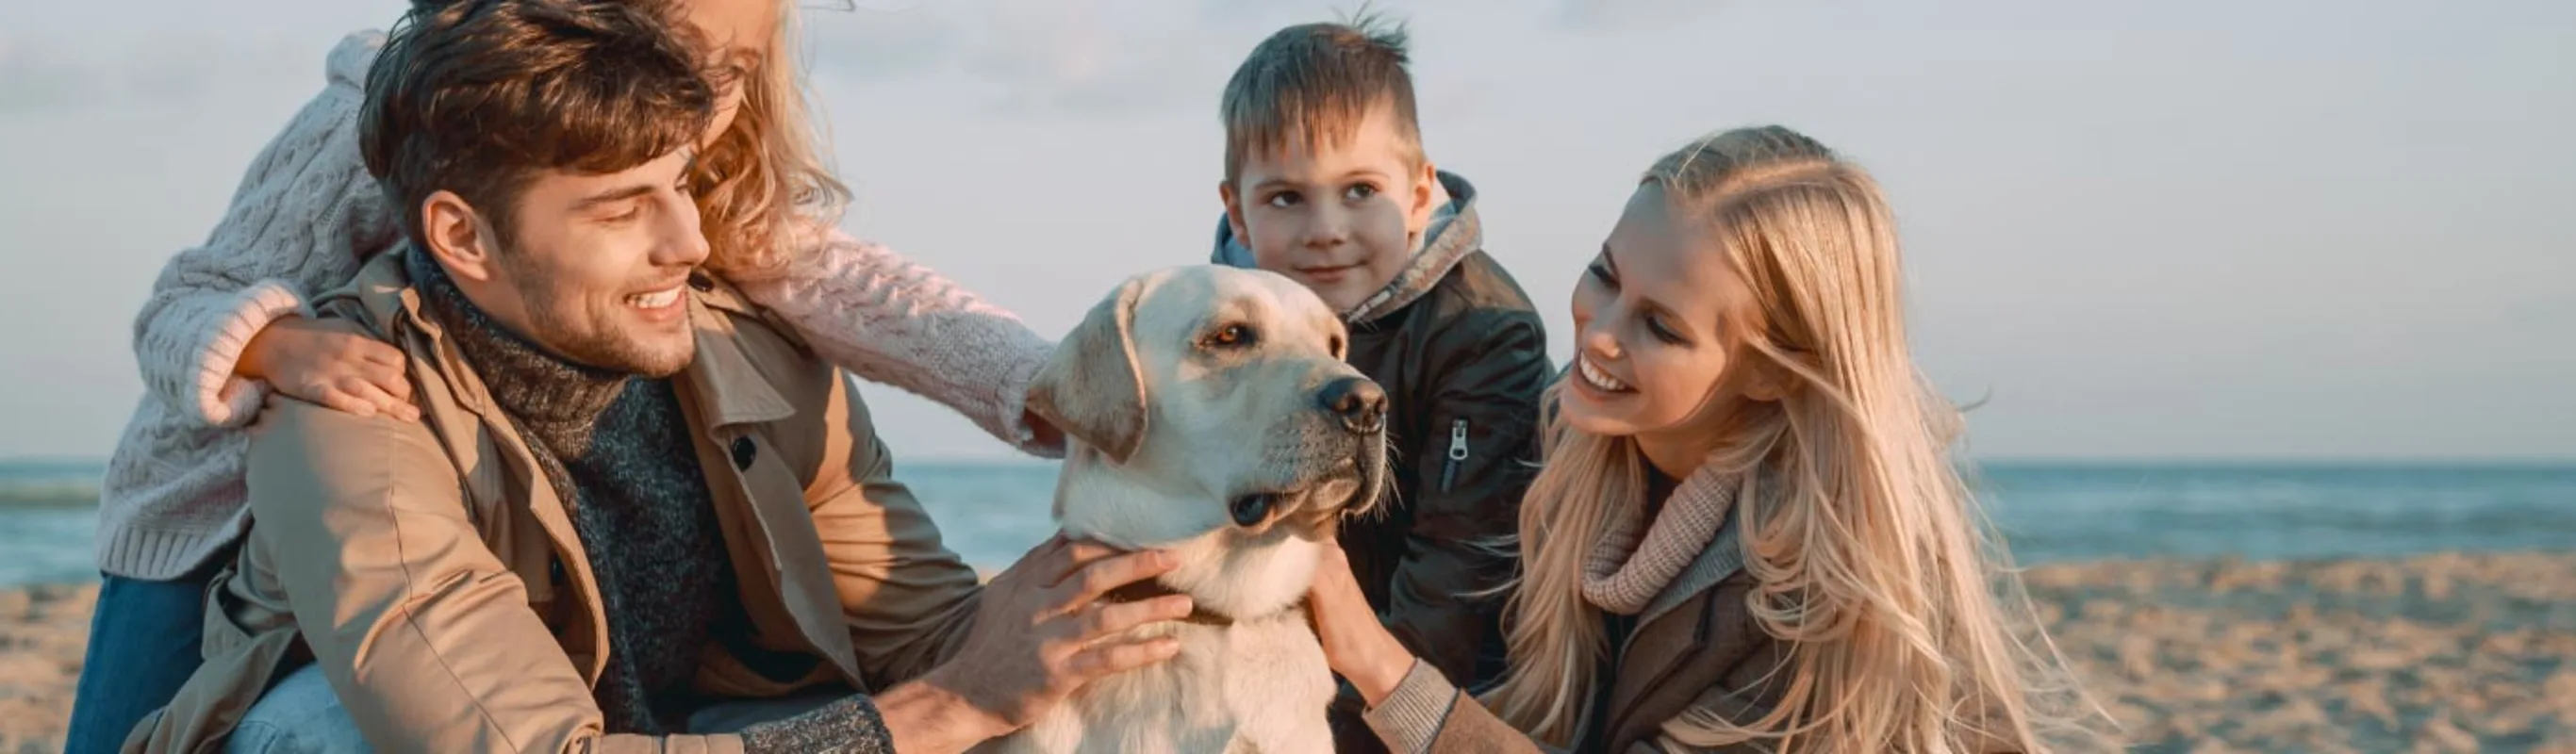 Family on Beach with Dog